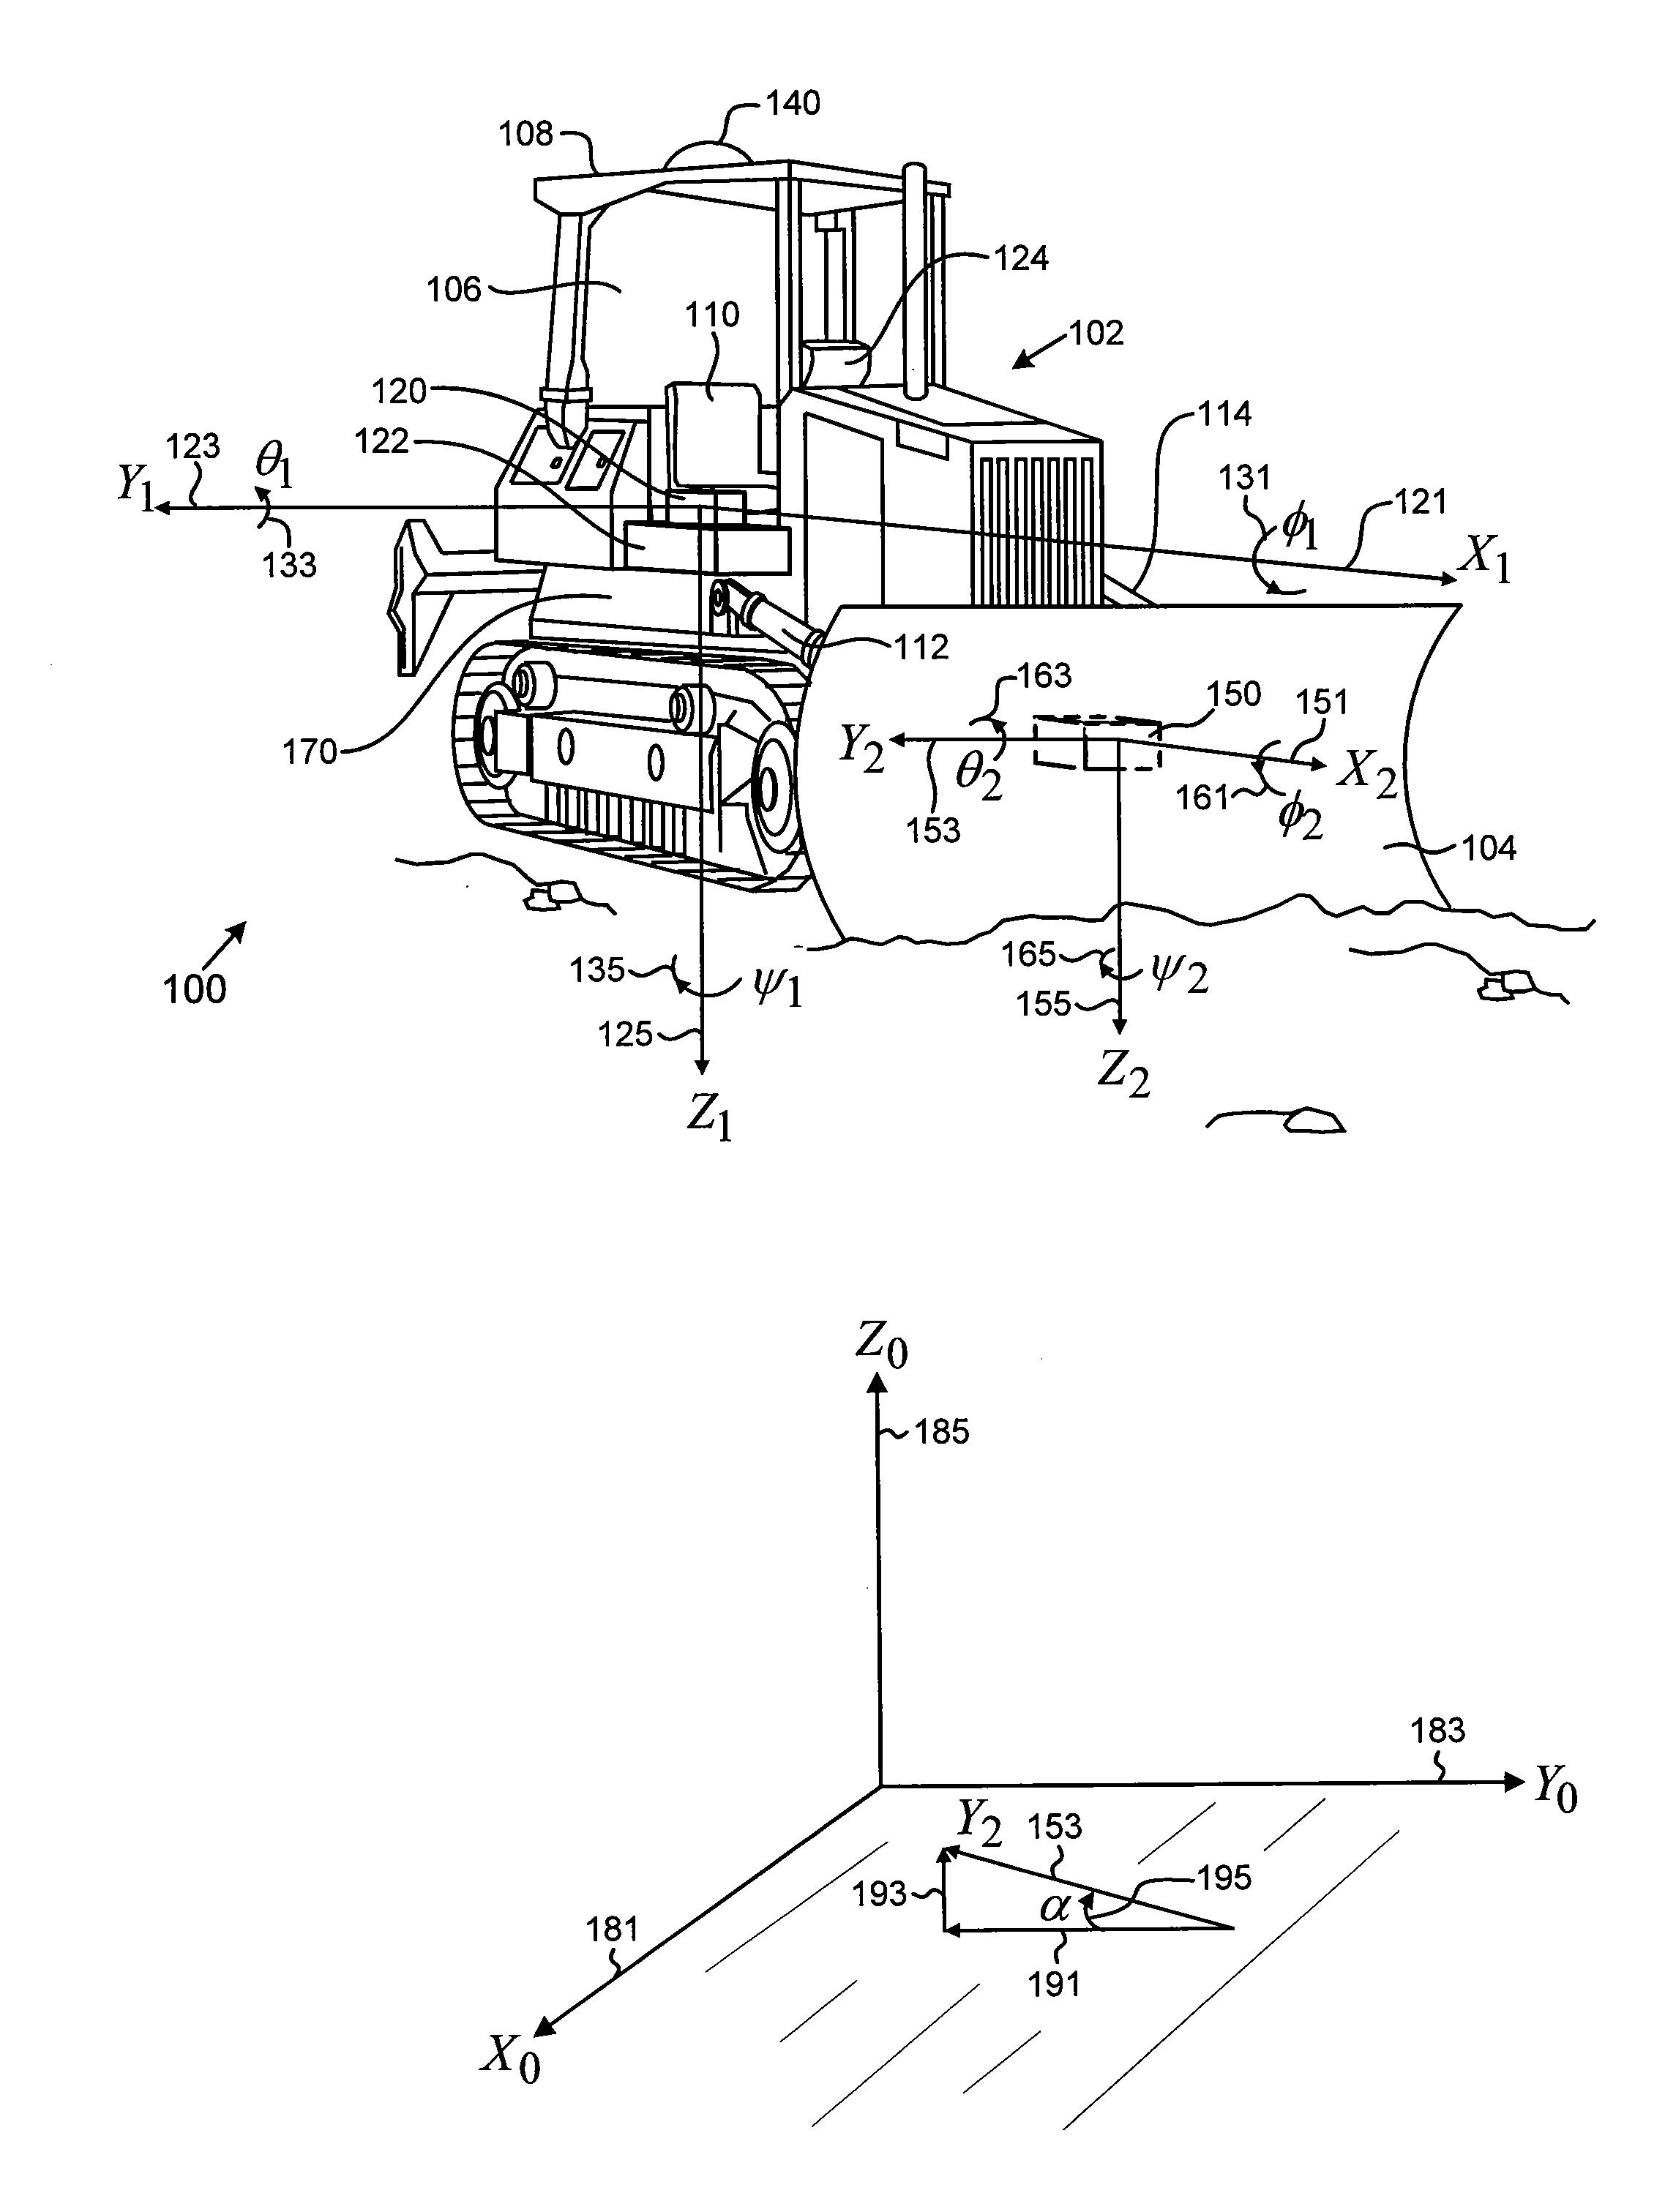 Semi-Automatic Control of a Joystick for Dozer Blade Control